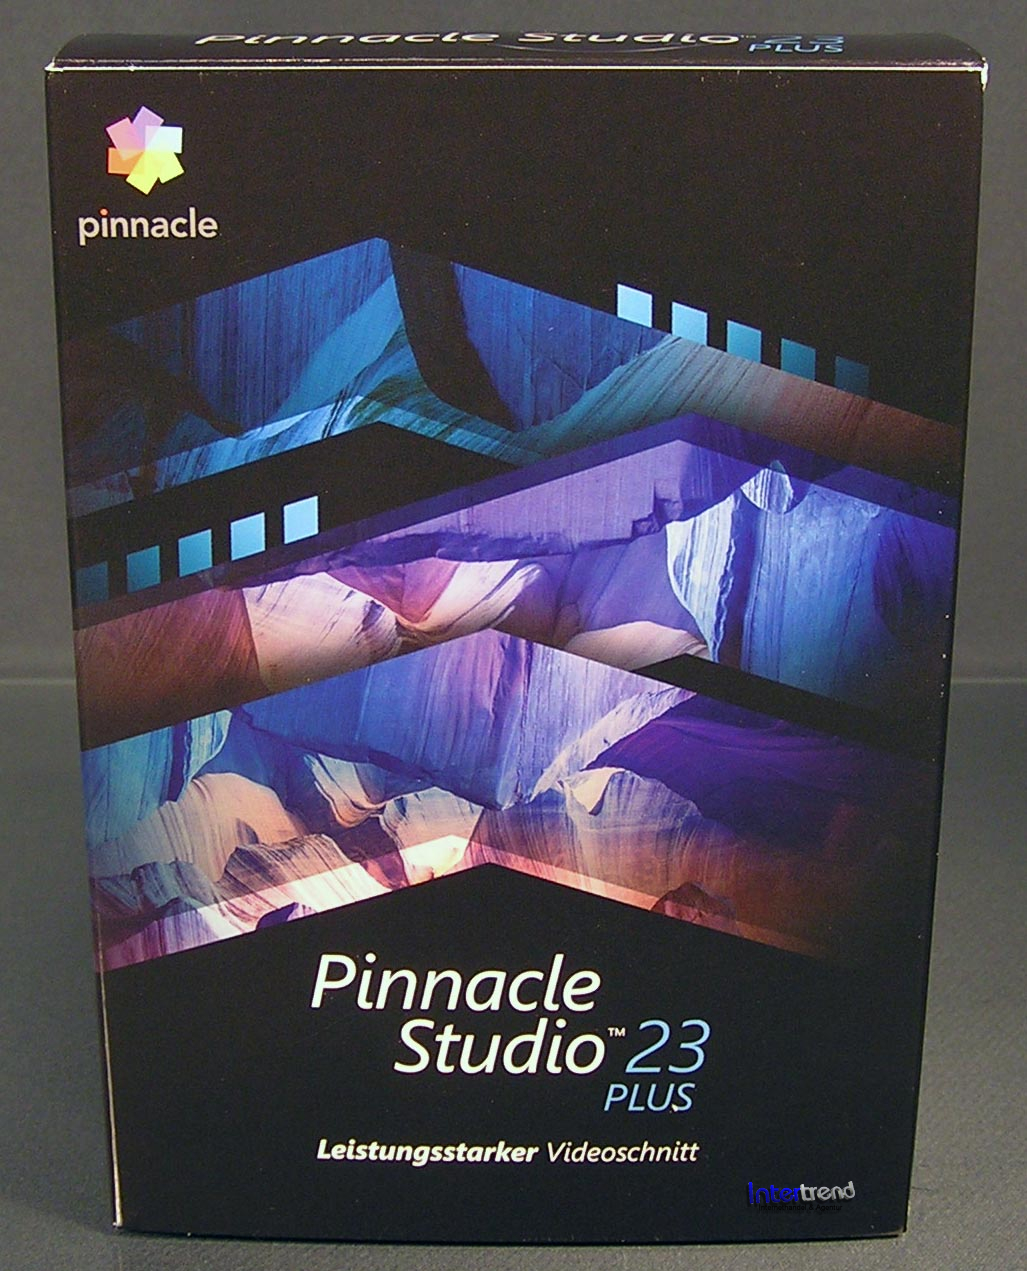 Pinnacle studio 23 download